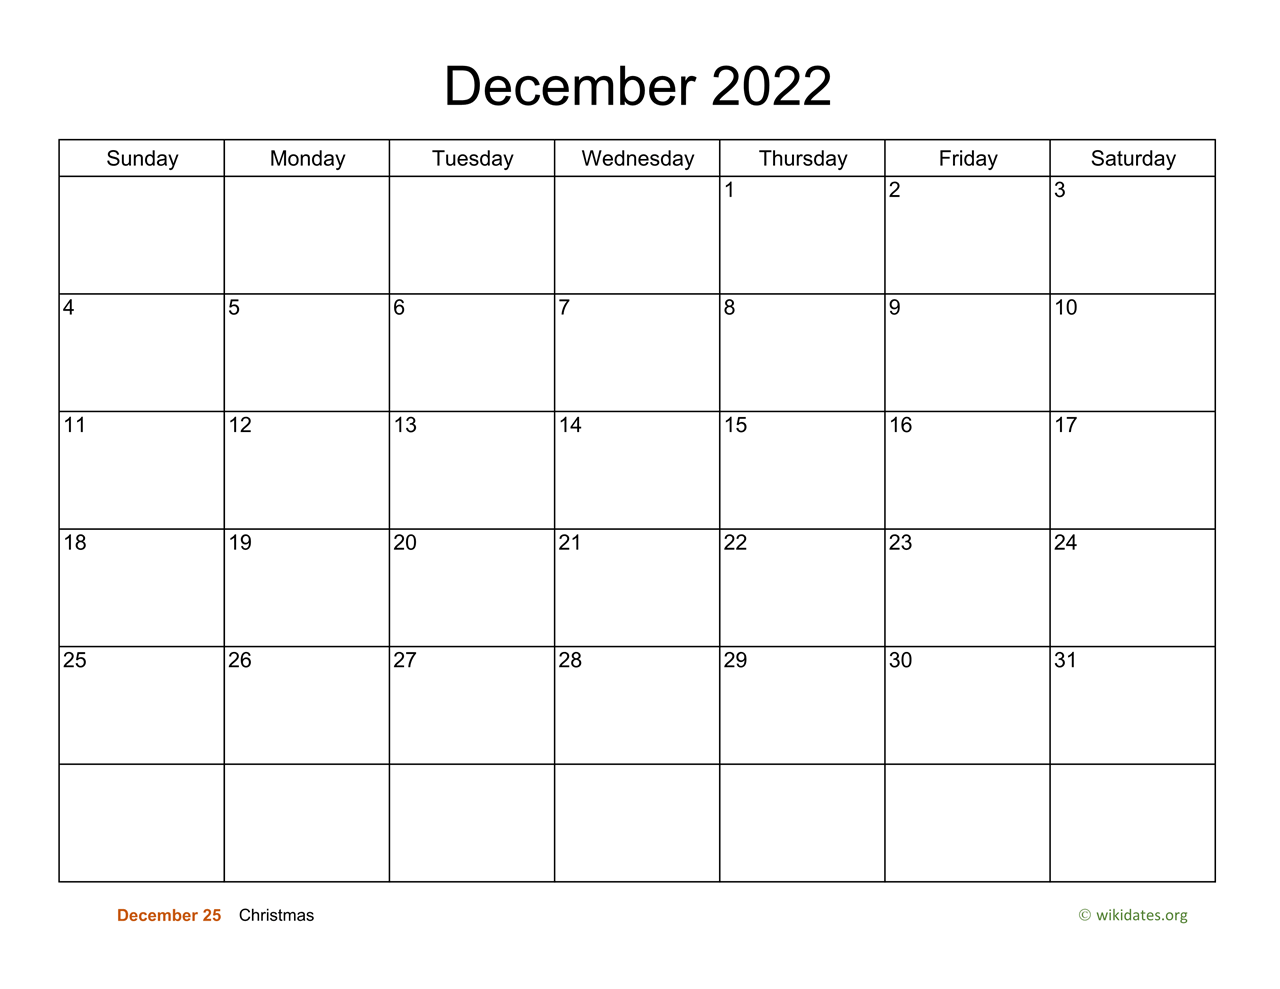 December 2022 Calendar Basic Calendar For December 2022 | Wikidates.org